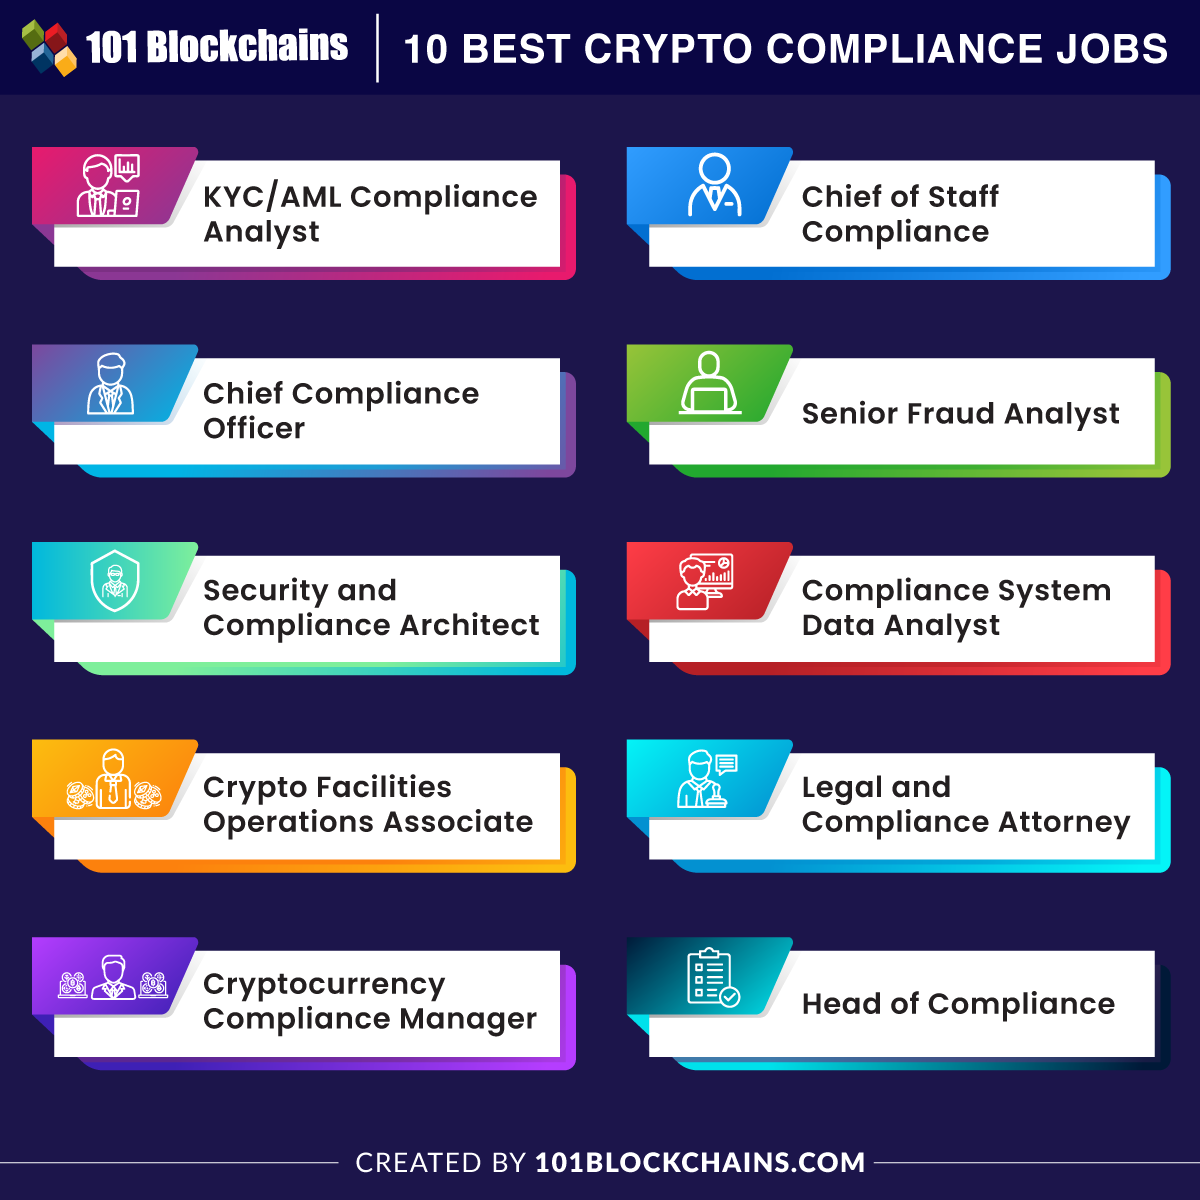 10 Best Crypto Compliance Jobs